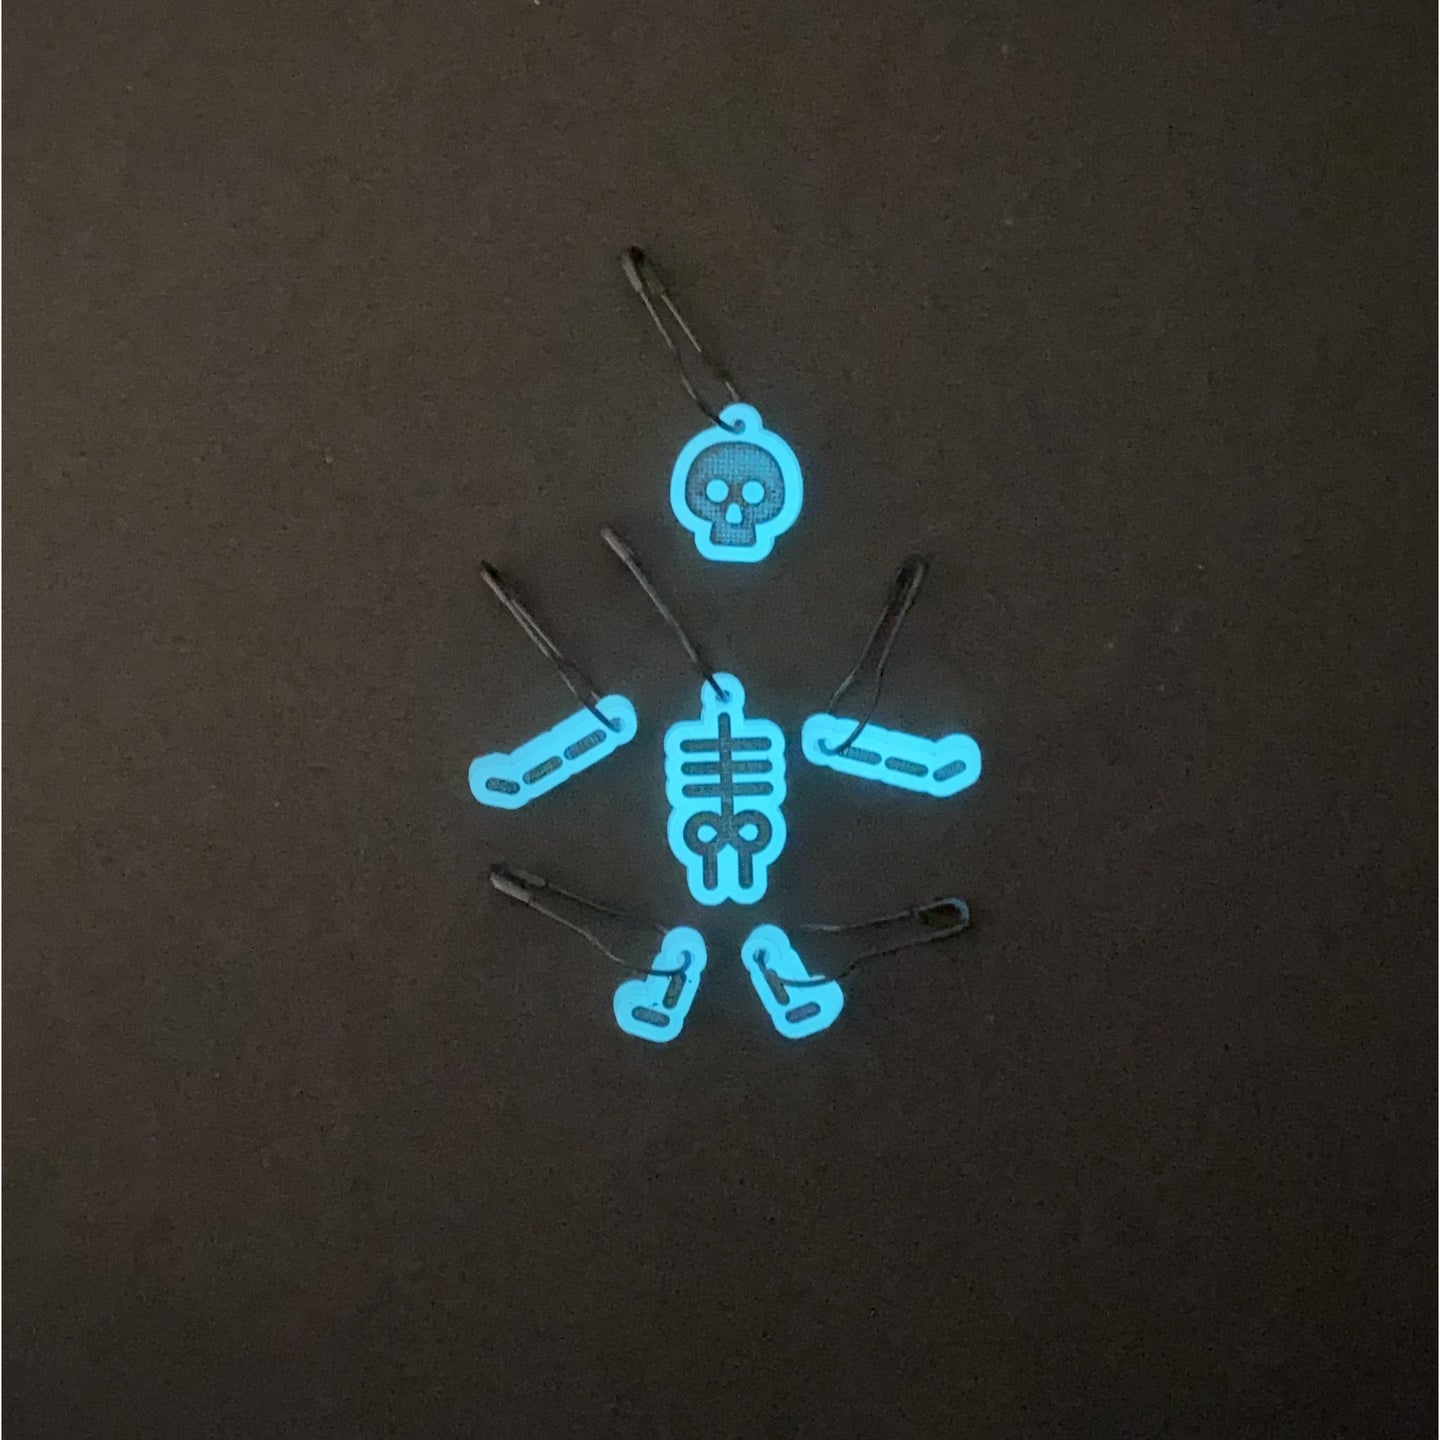 Glow in the dark skeleton stitch markers